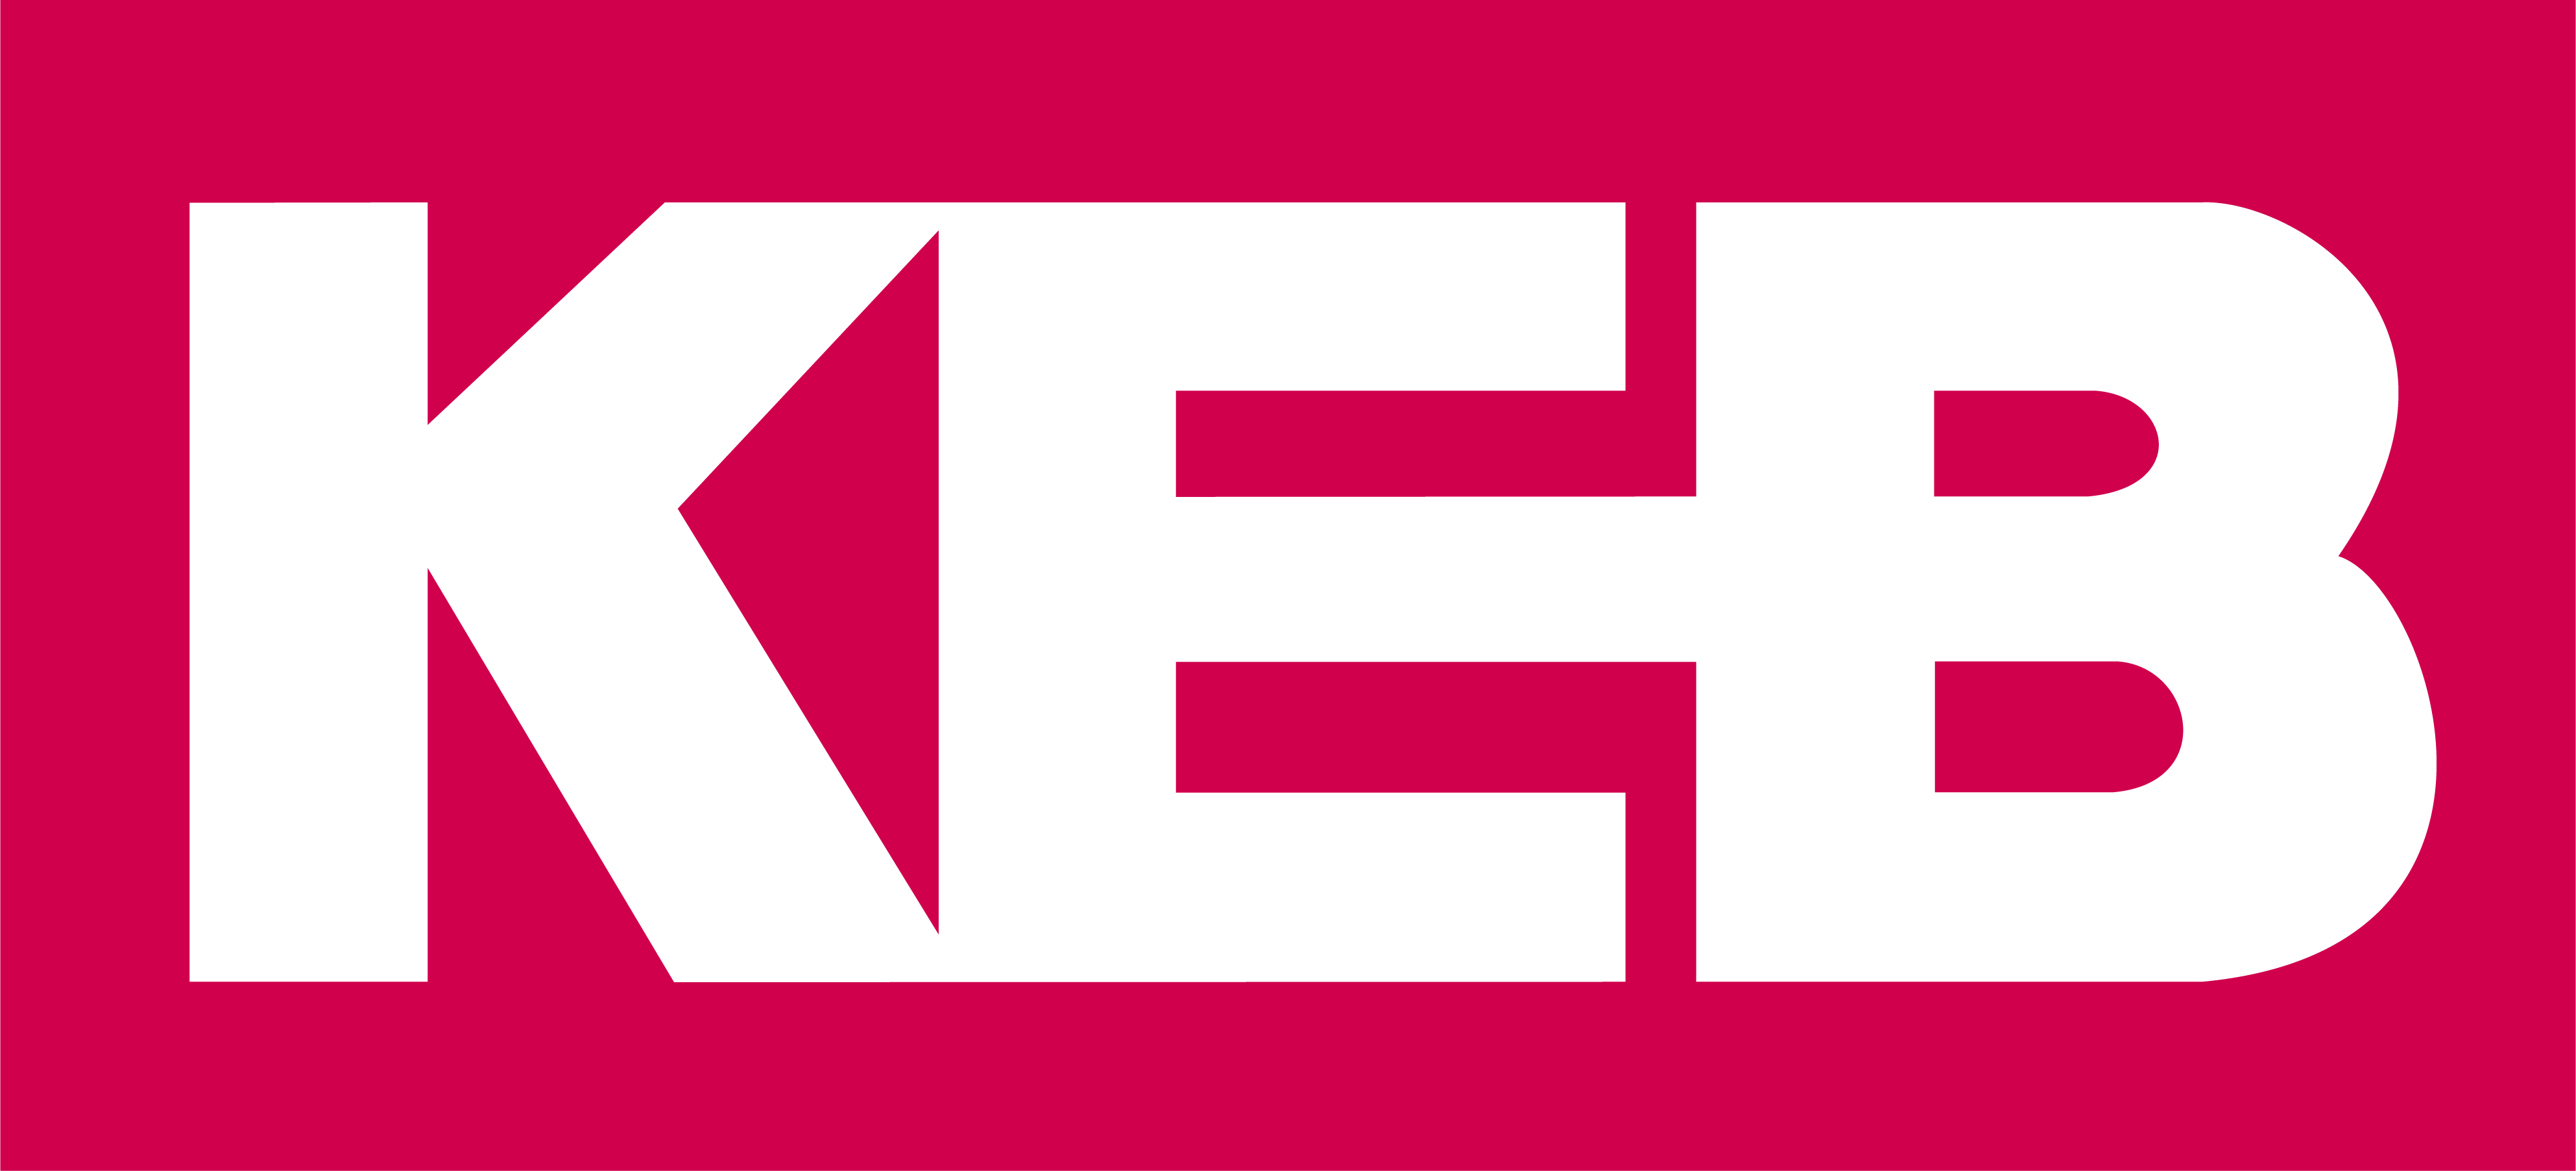 Keb automation kg logo